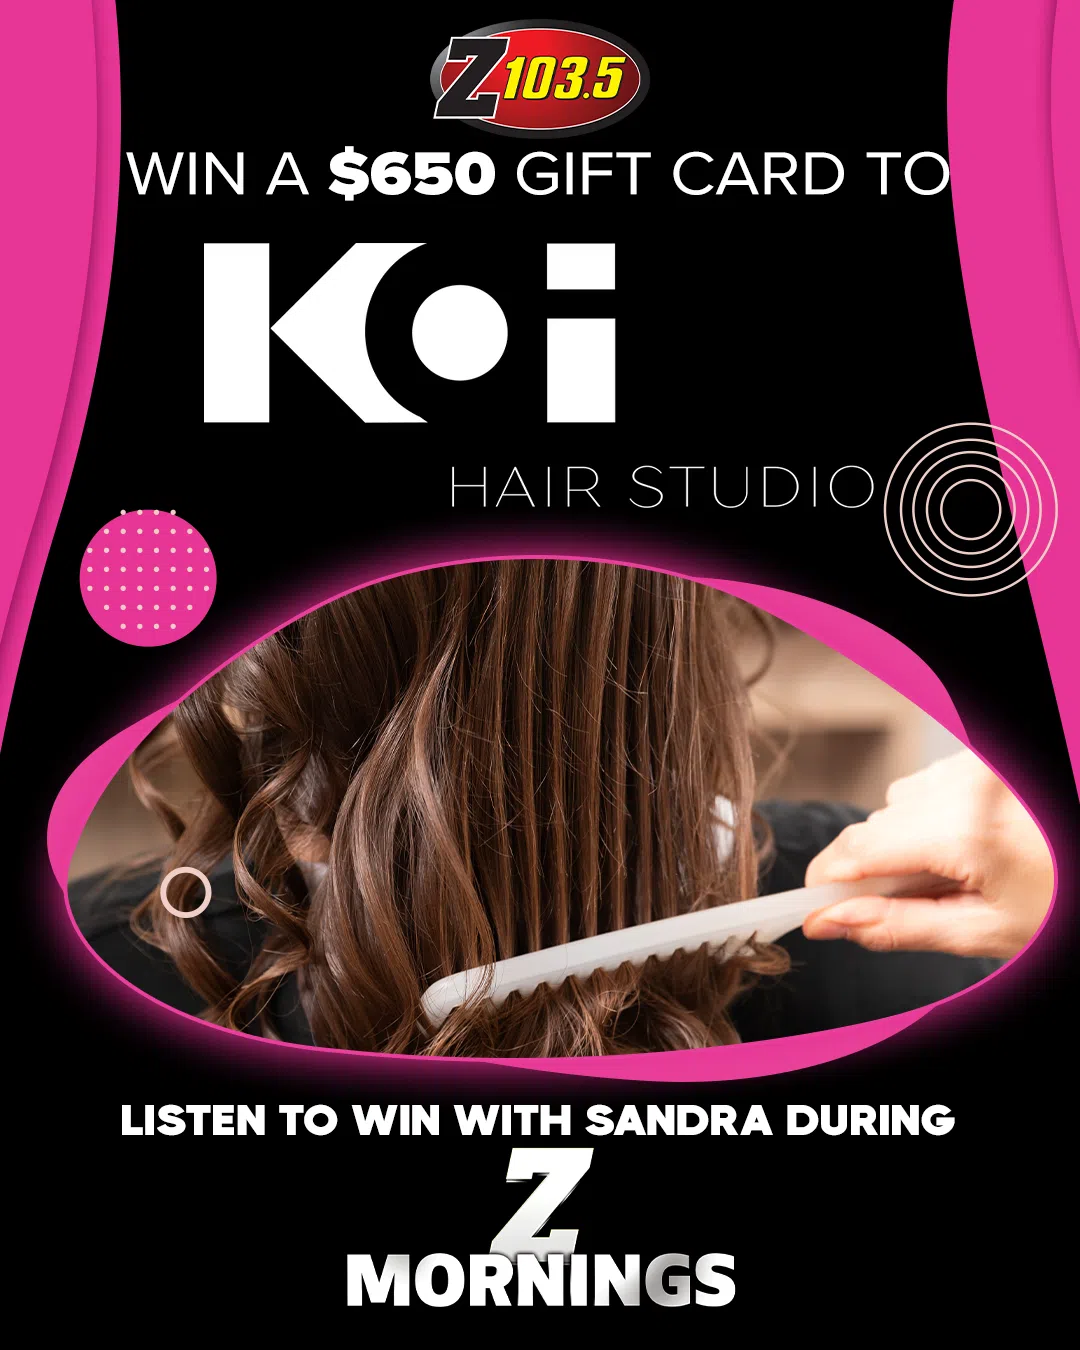 Feature: https://z1035.com/win/win-a-650-gift-card-to-koi-hair-studio/